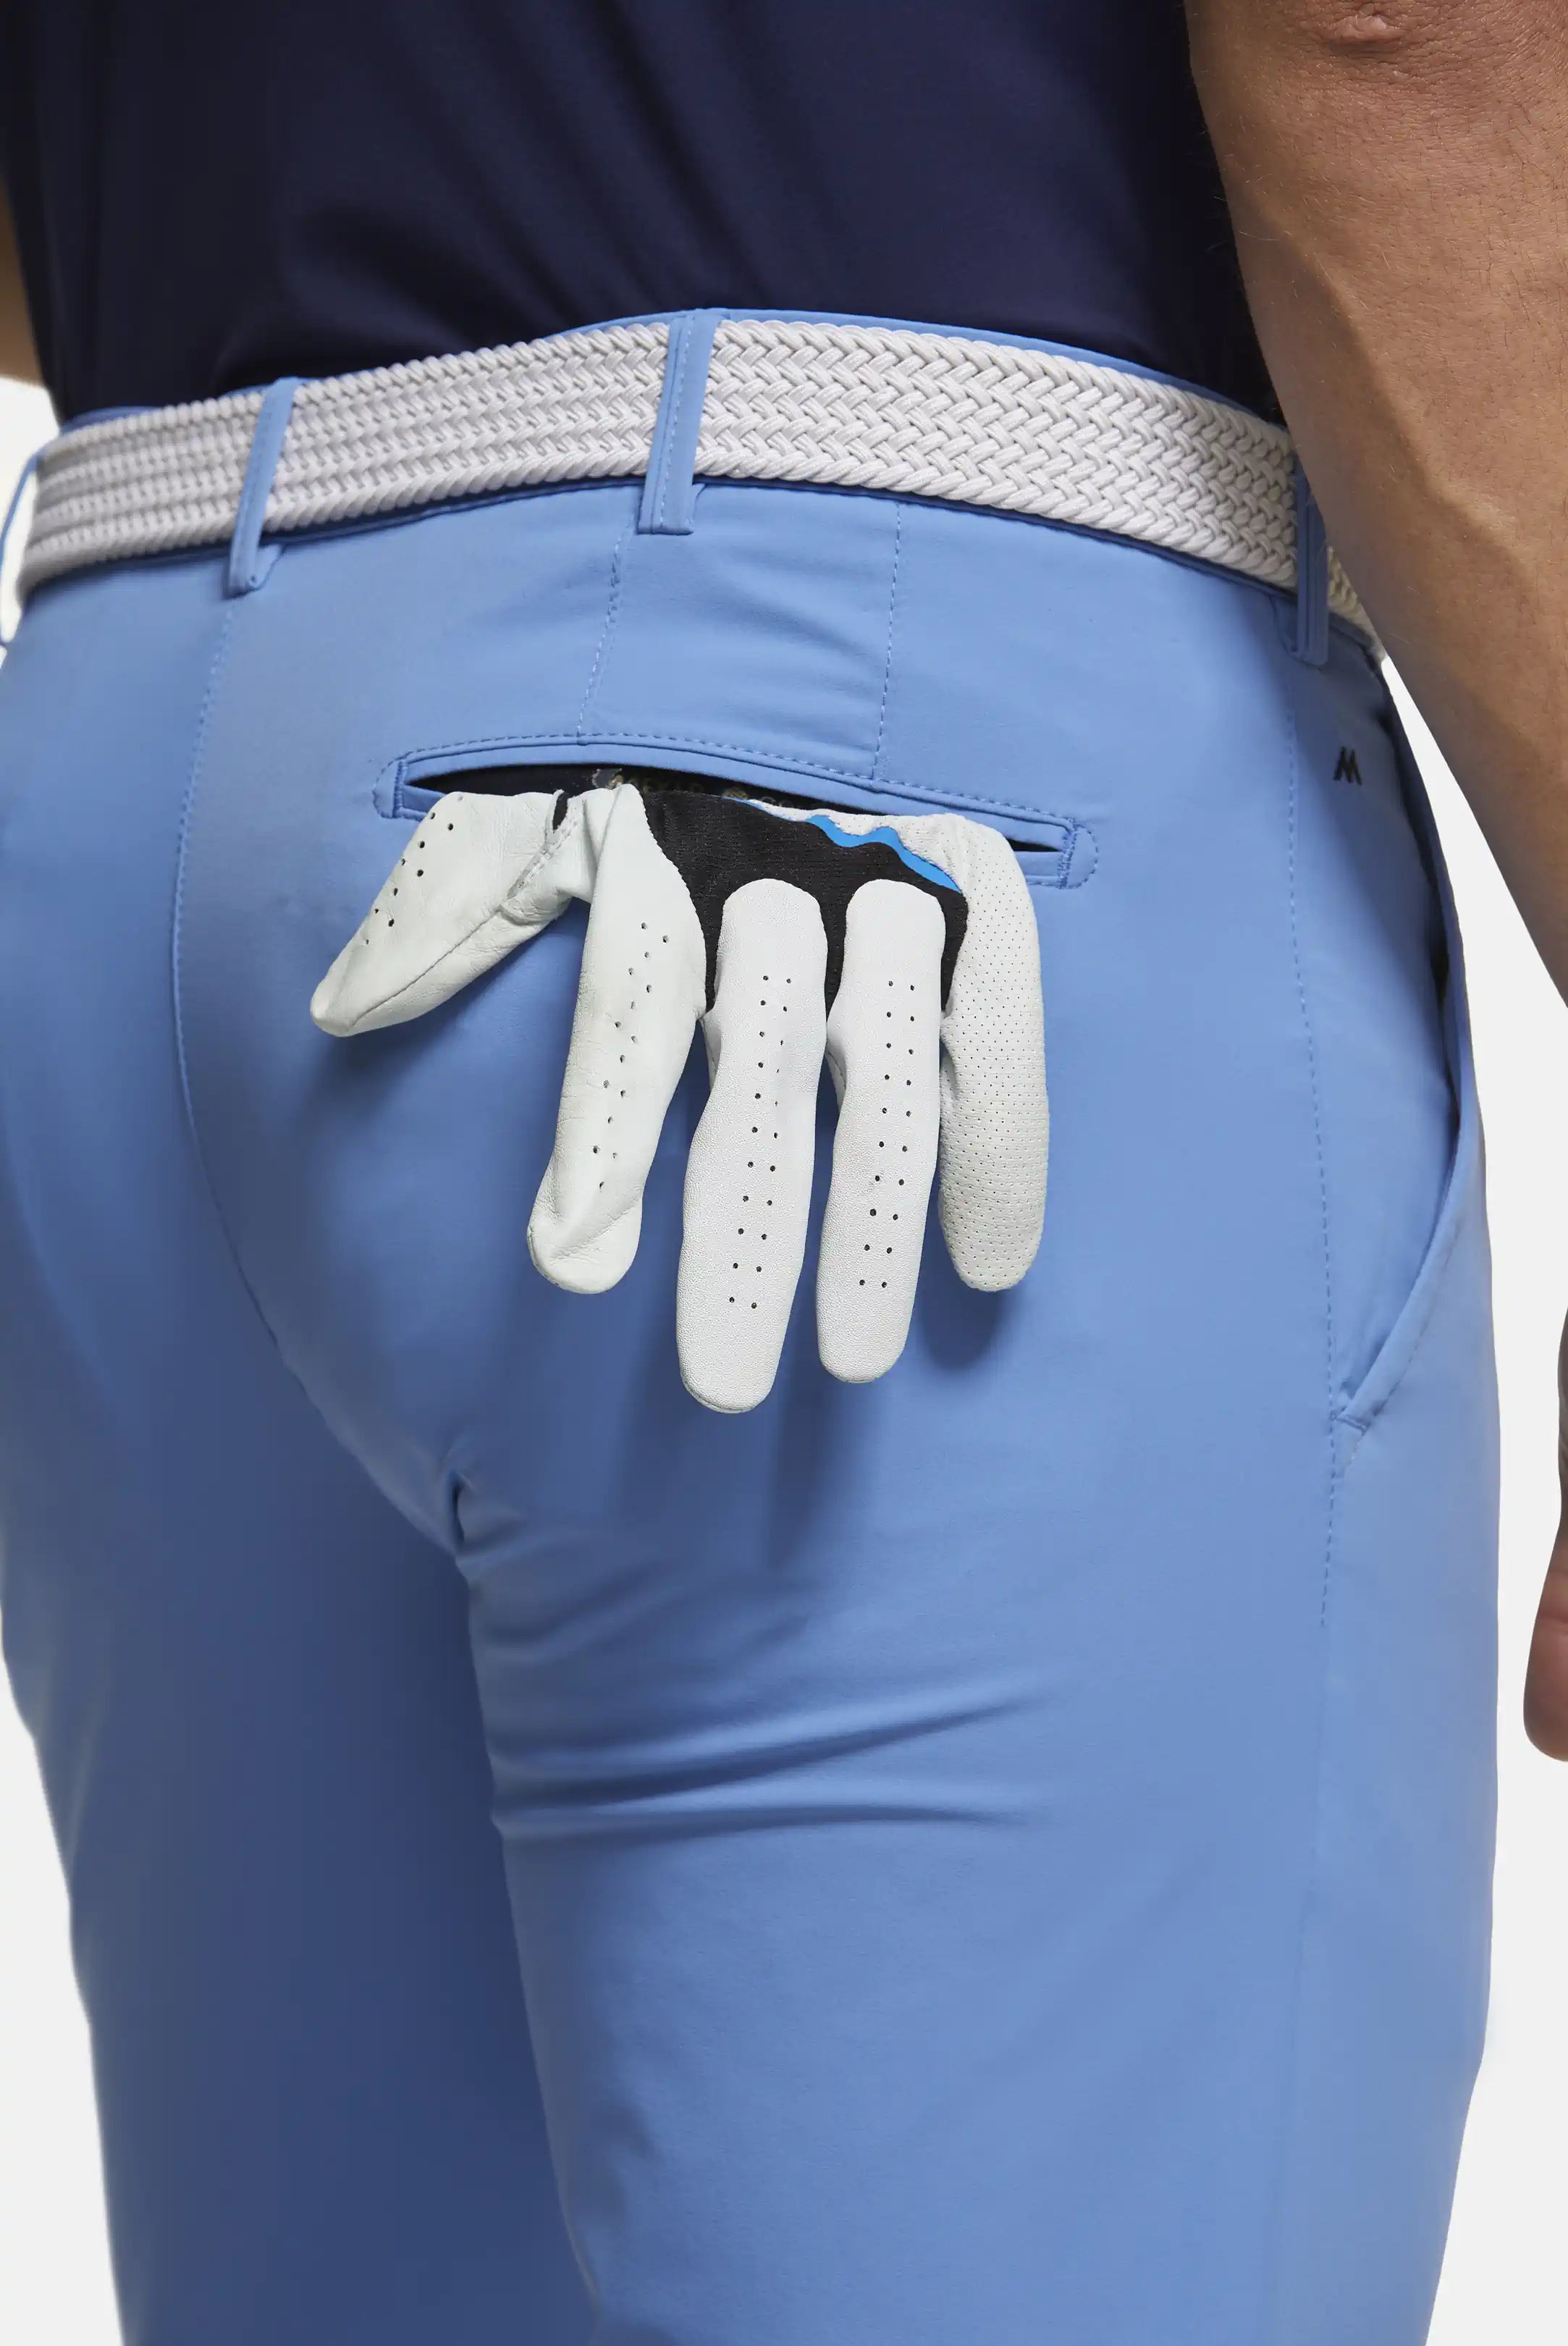 MEYER Golf Trousers - Augusta 8070 High Performance Chinos - Light Blue